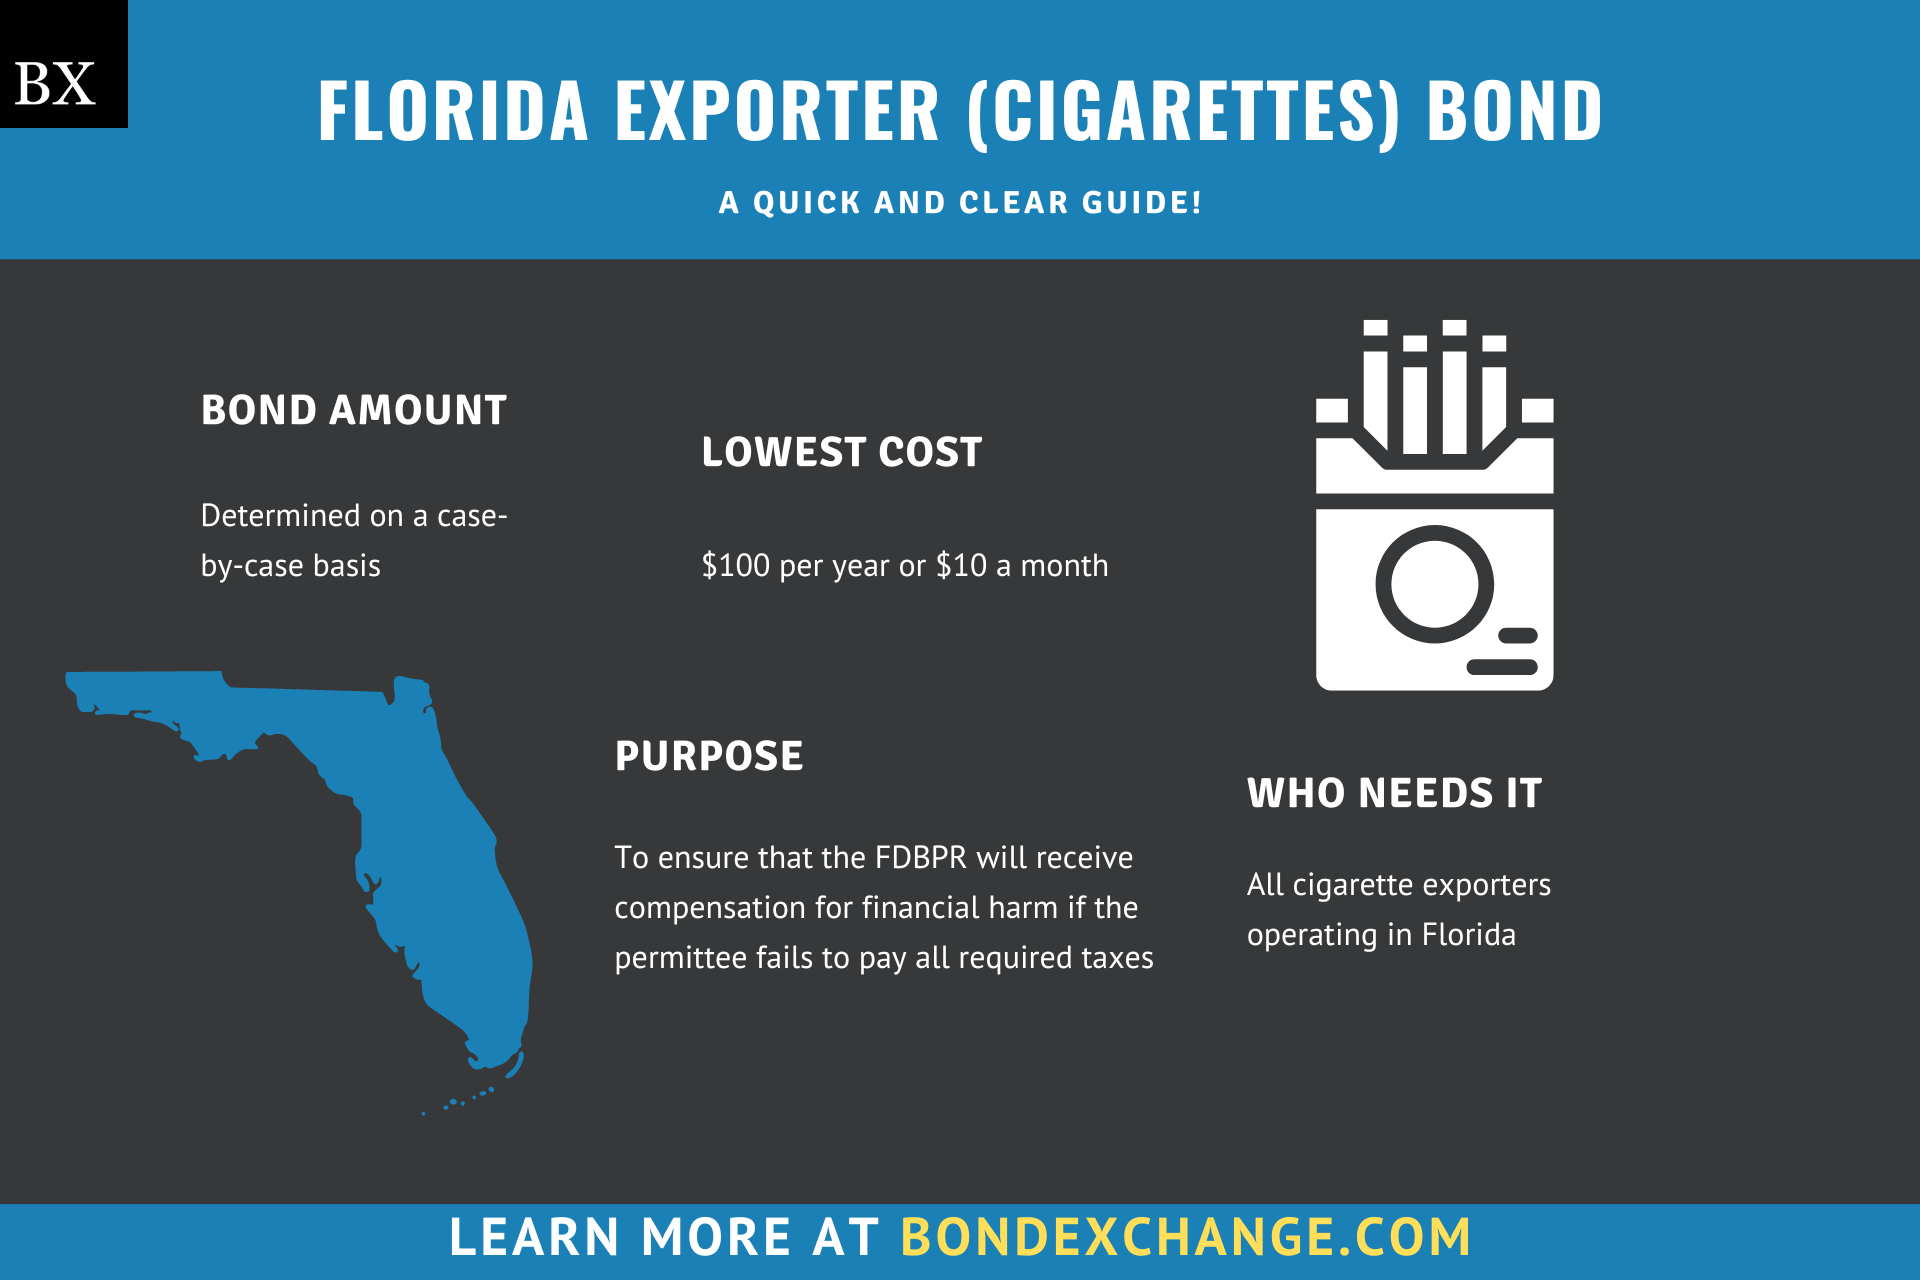 Florida Exporter (Cigarettes) Bond